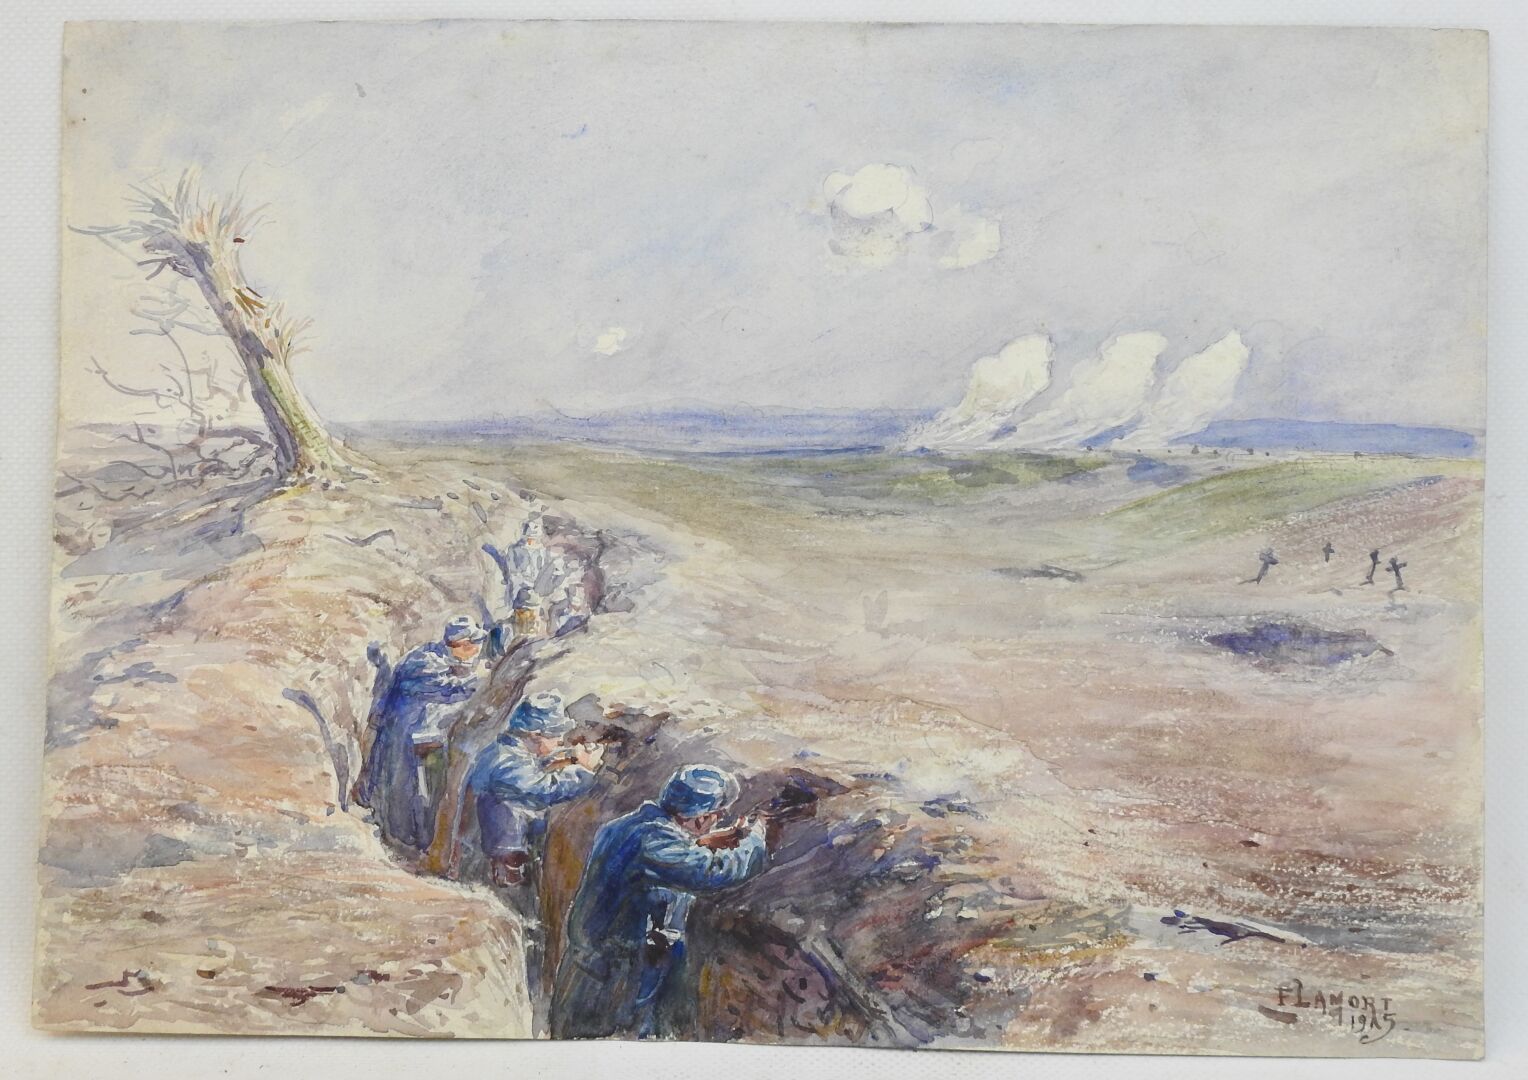 Null FLAMORT A. "战壕中的场景，1915年 "水彩画，SBD，日期为1915年，24 X 34厘米，未装裱。ABE